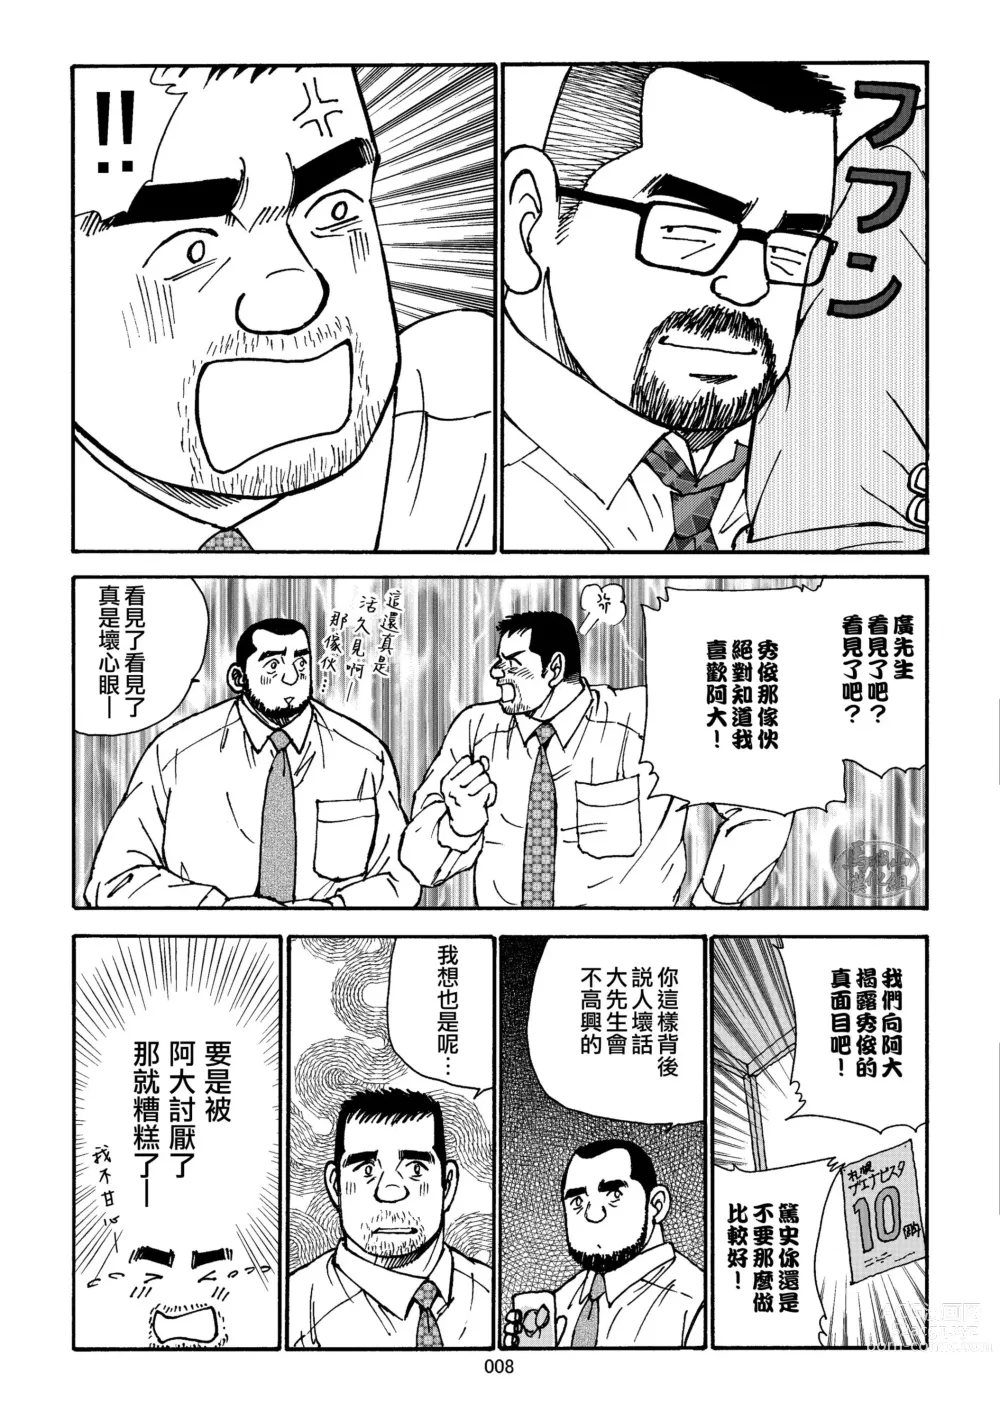 Page 8 of manga おいしい性活